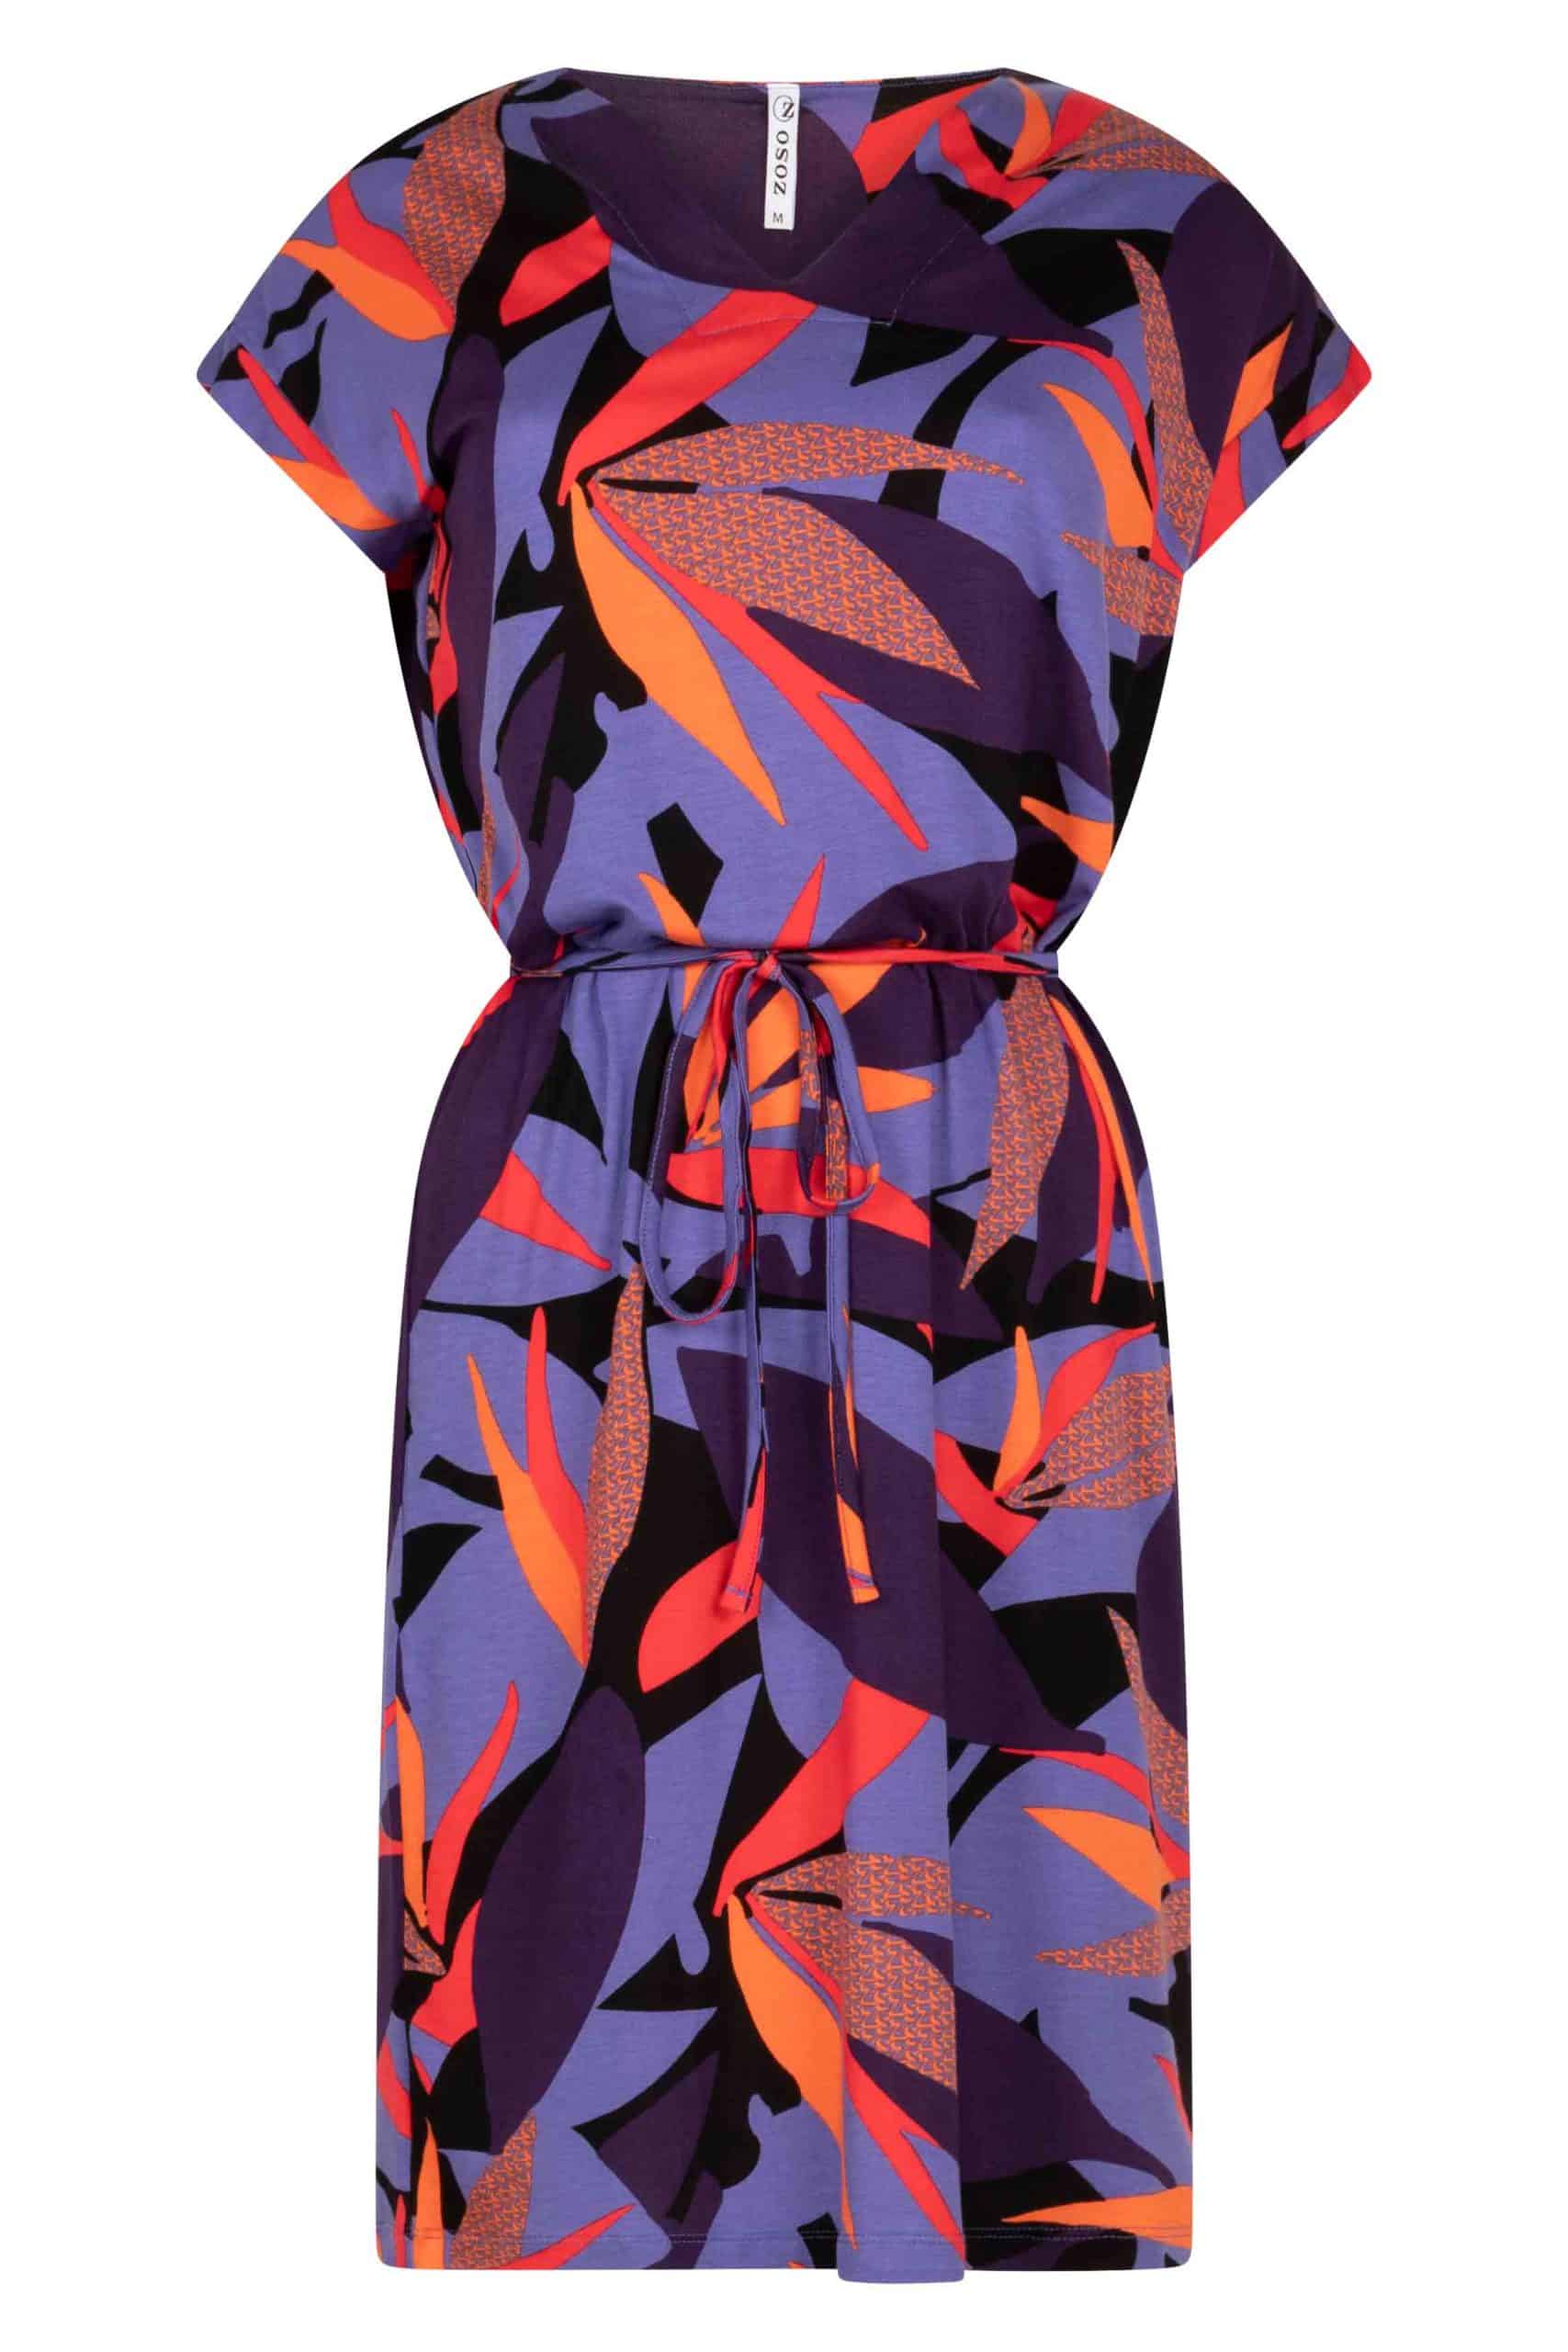 Zoso 223 Jacky Printed Dress Purple